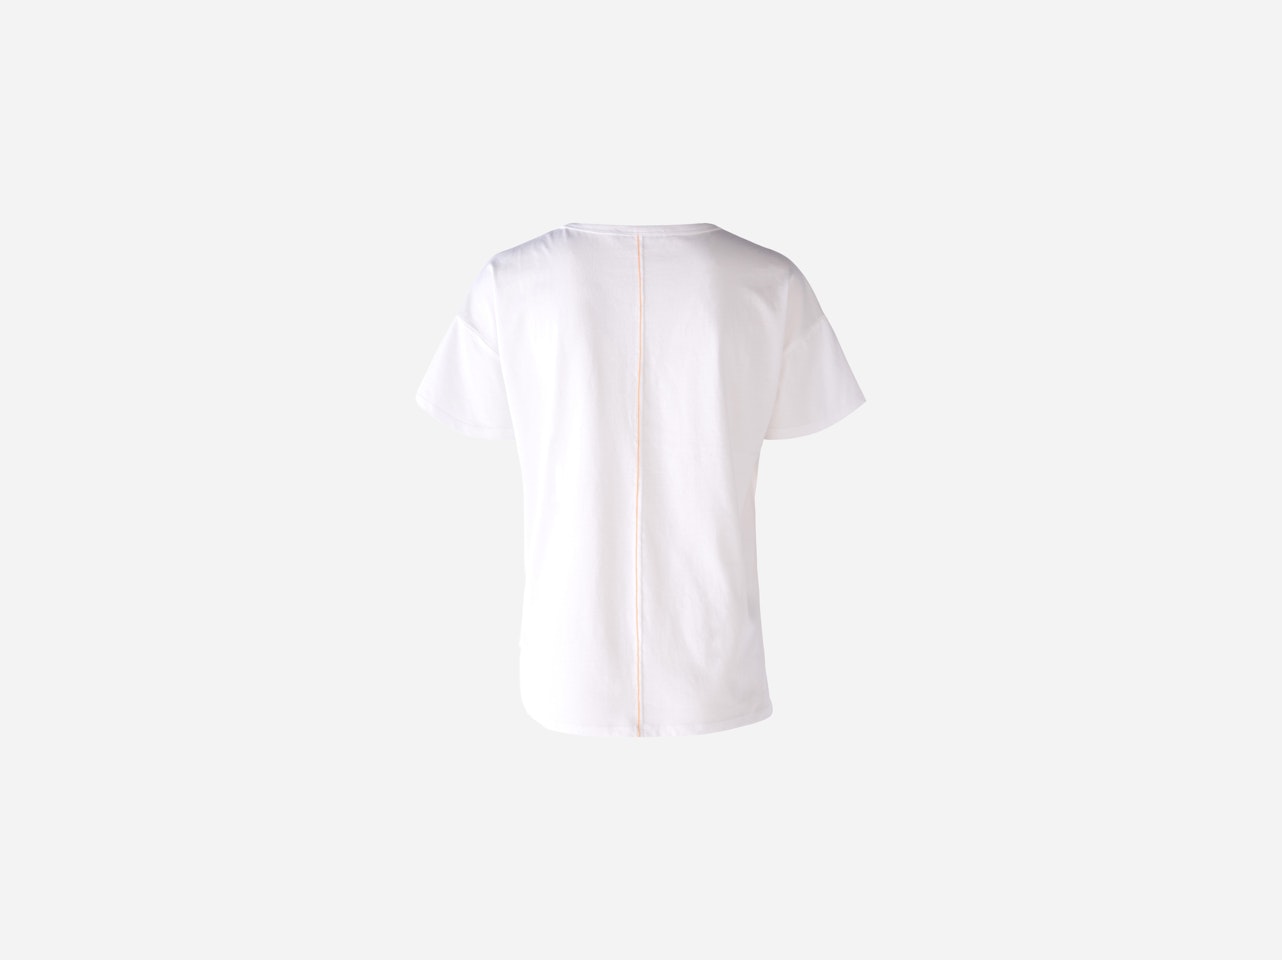 Bild 9 von T-shirt made from organic cotton in optic white | Oui